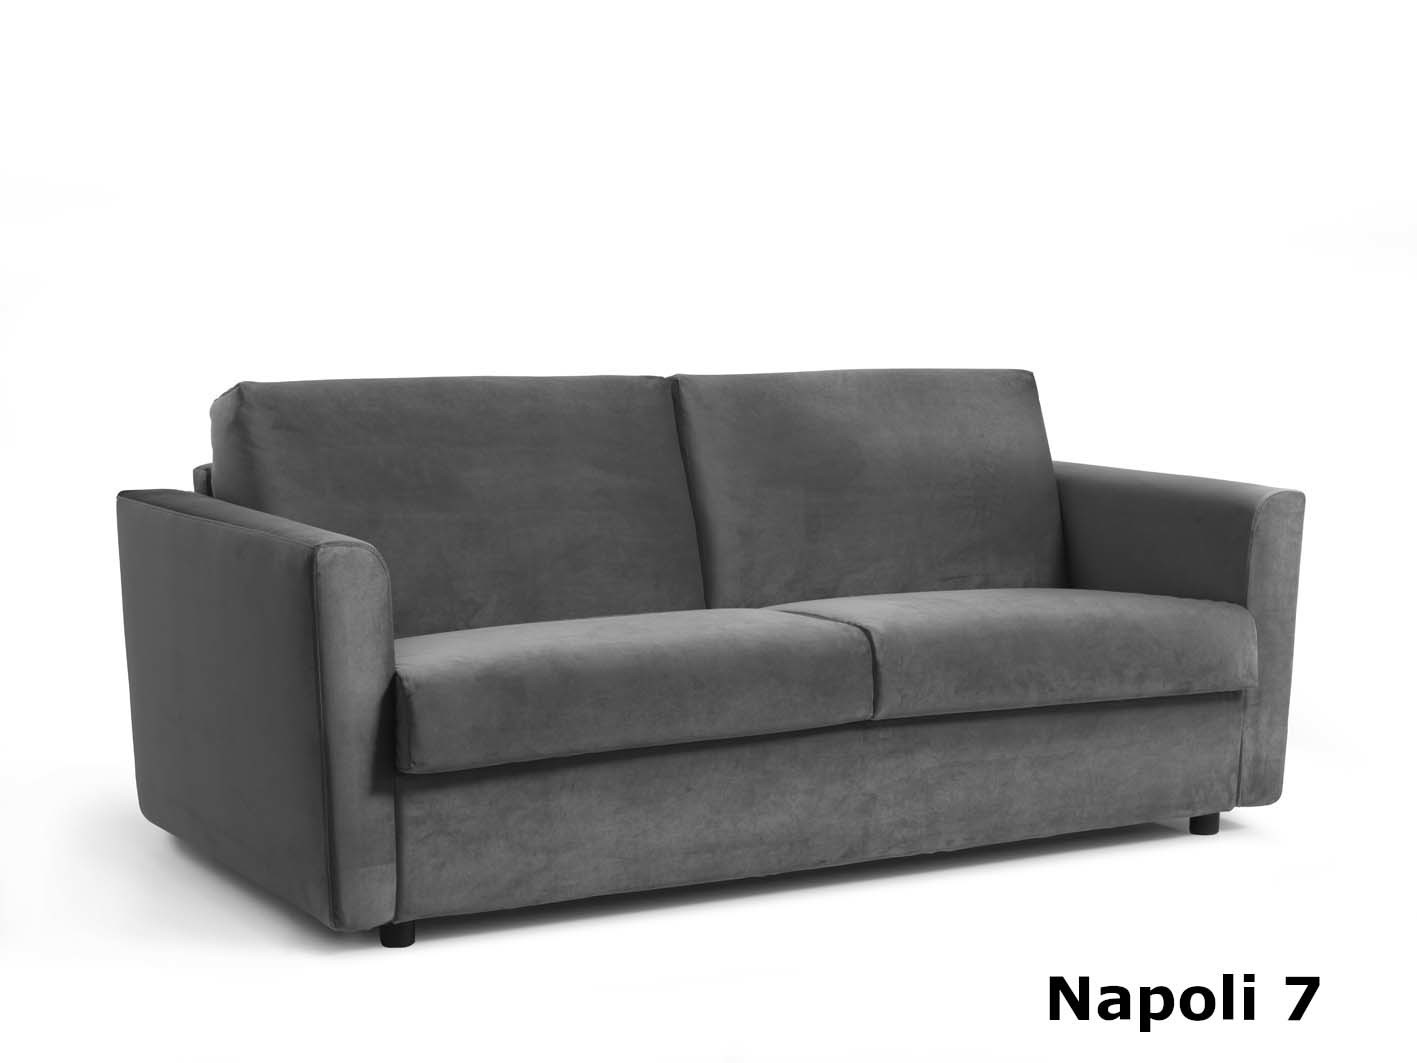 Napoli 7